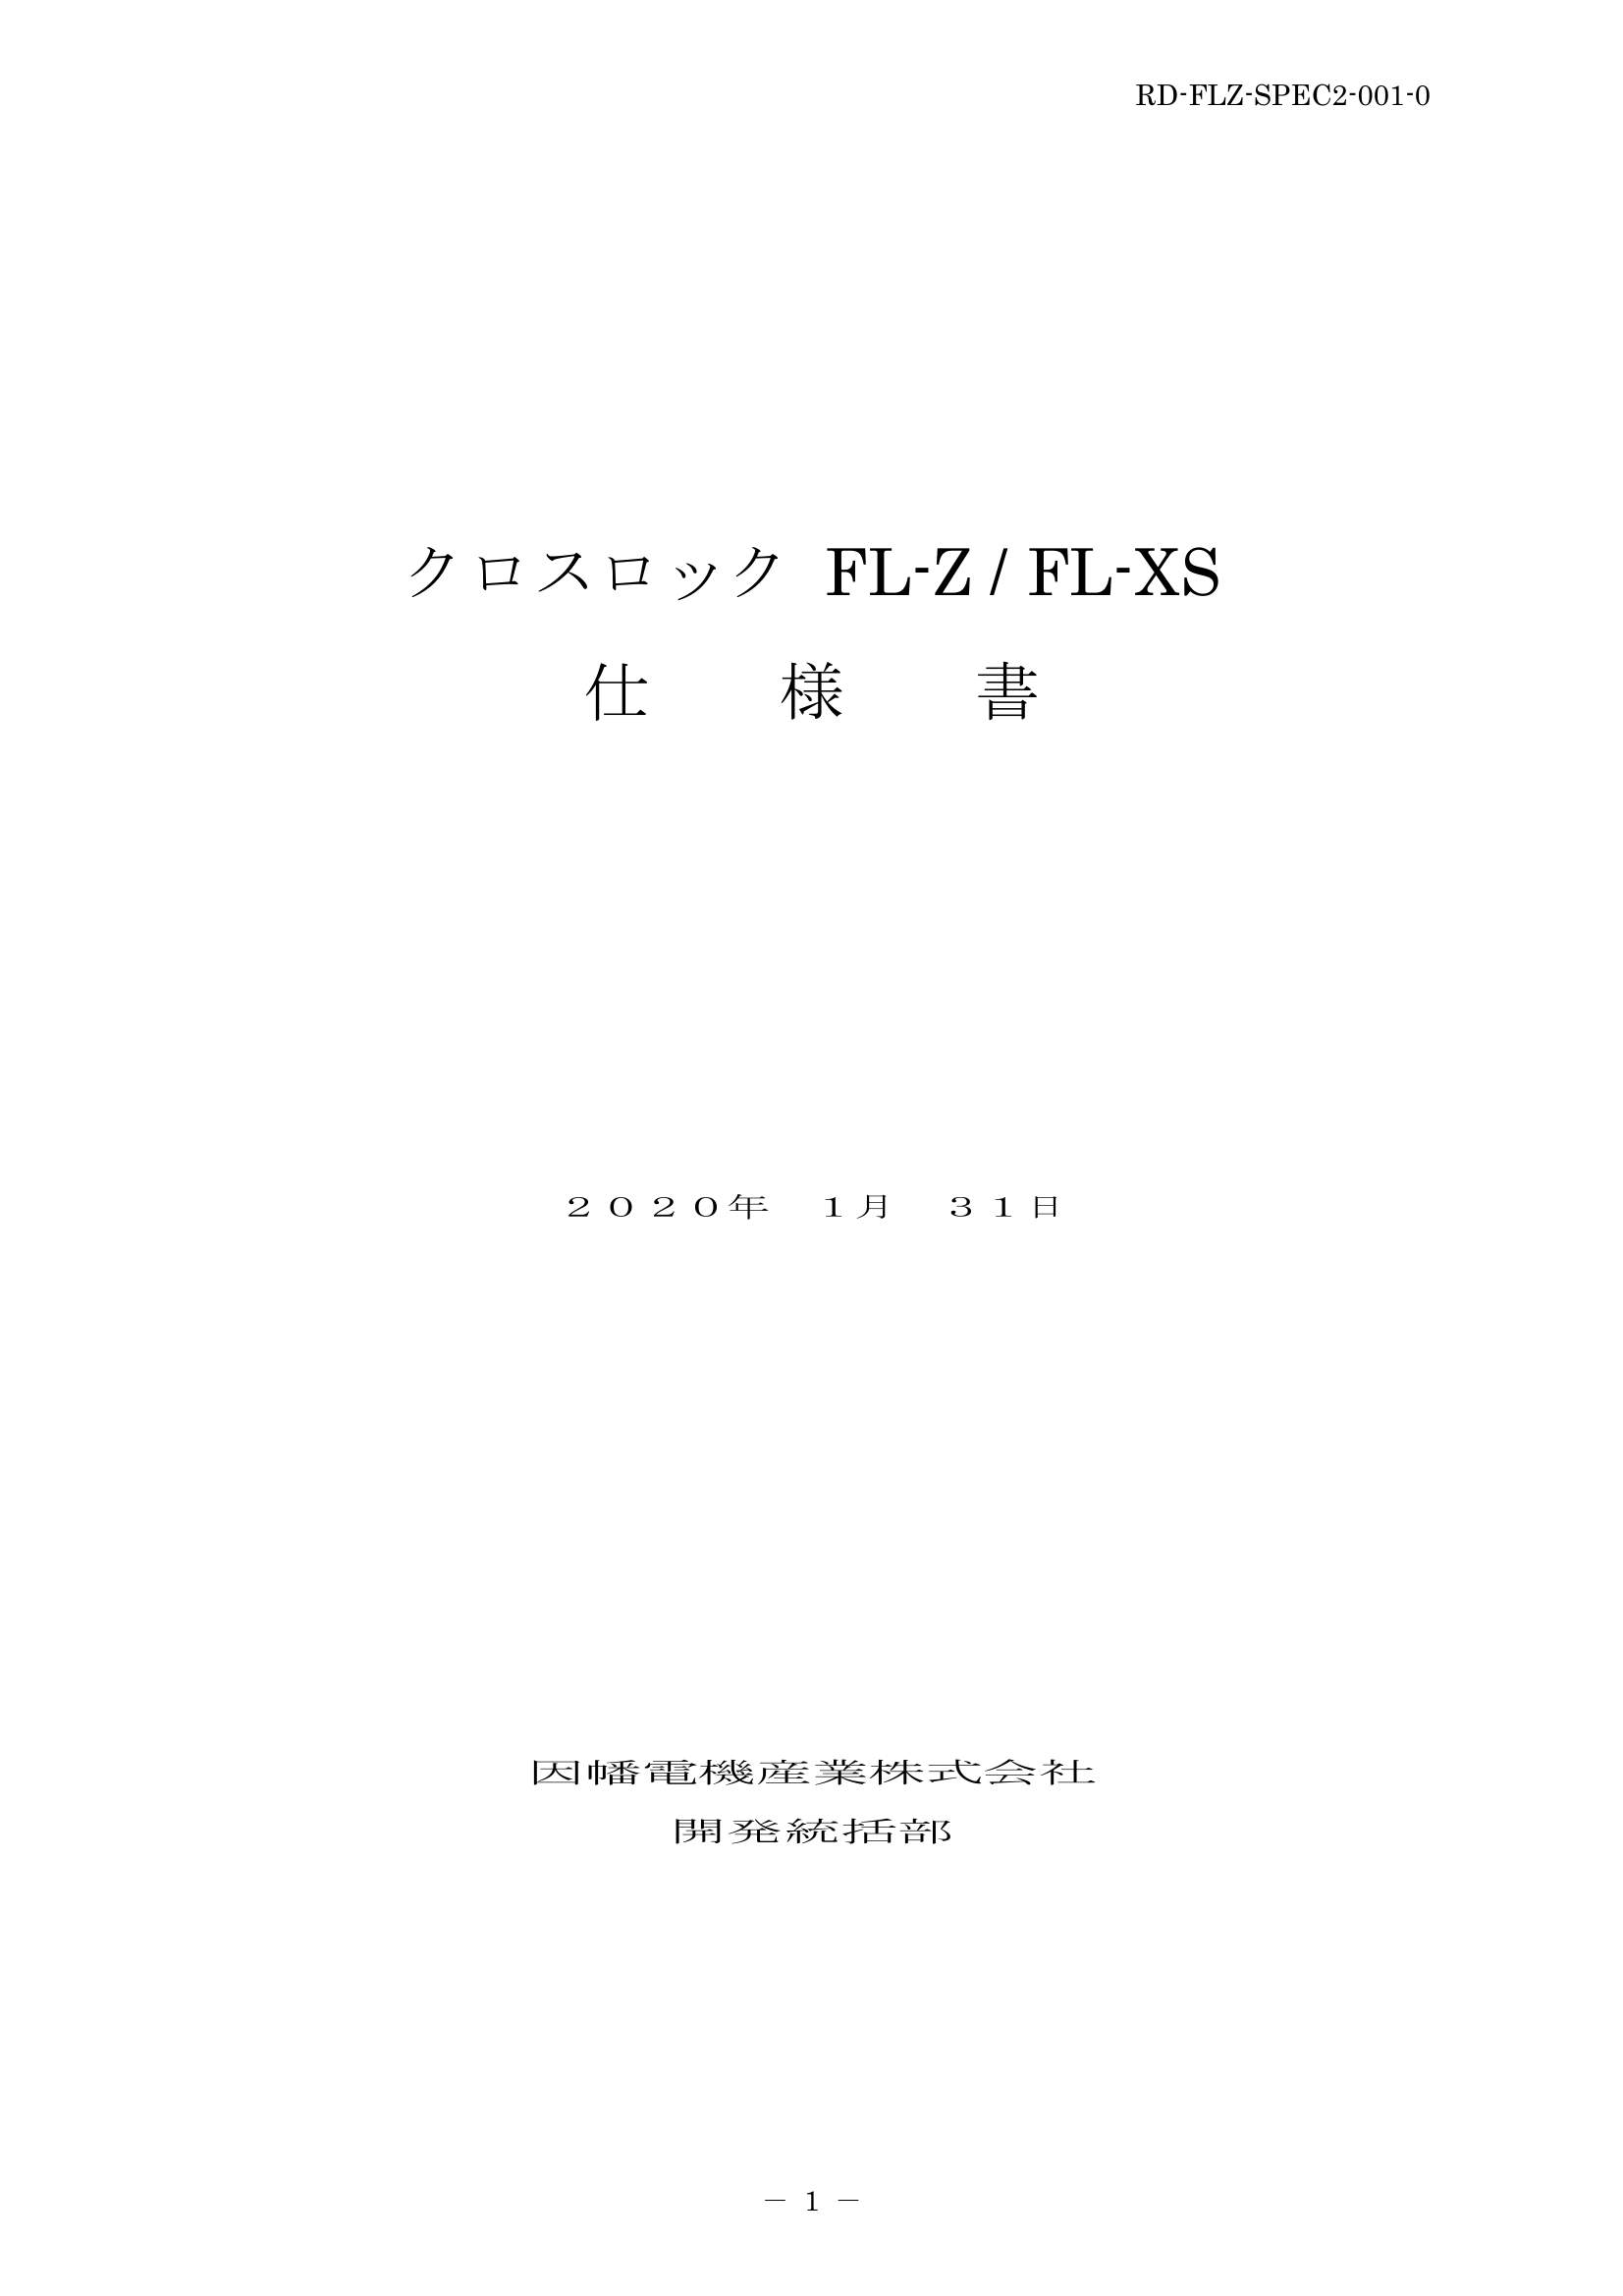 FL-Z_FL-XS_仕様書_20200131.pdf